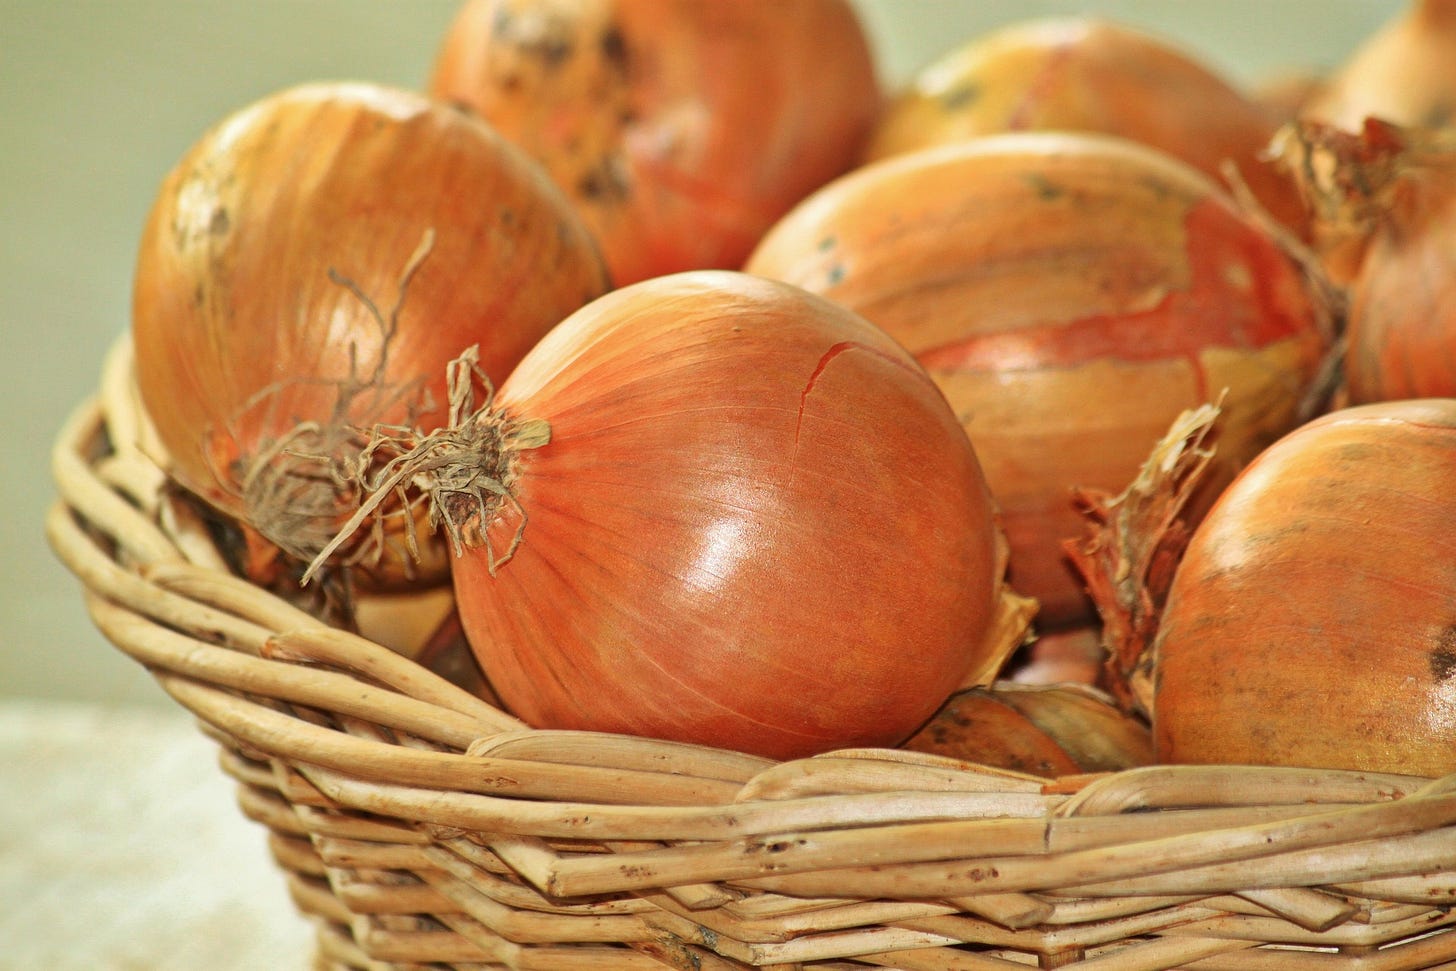 Basket of onions